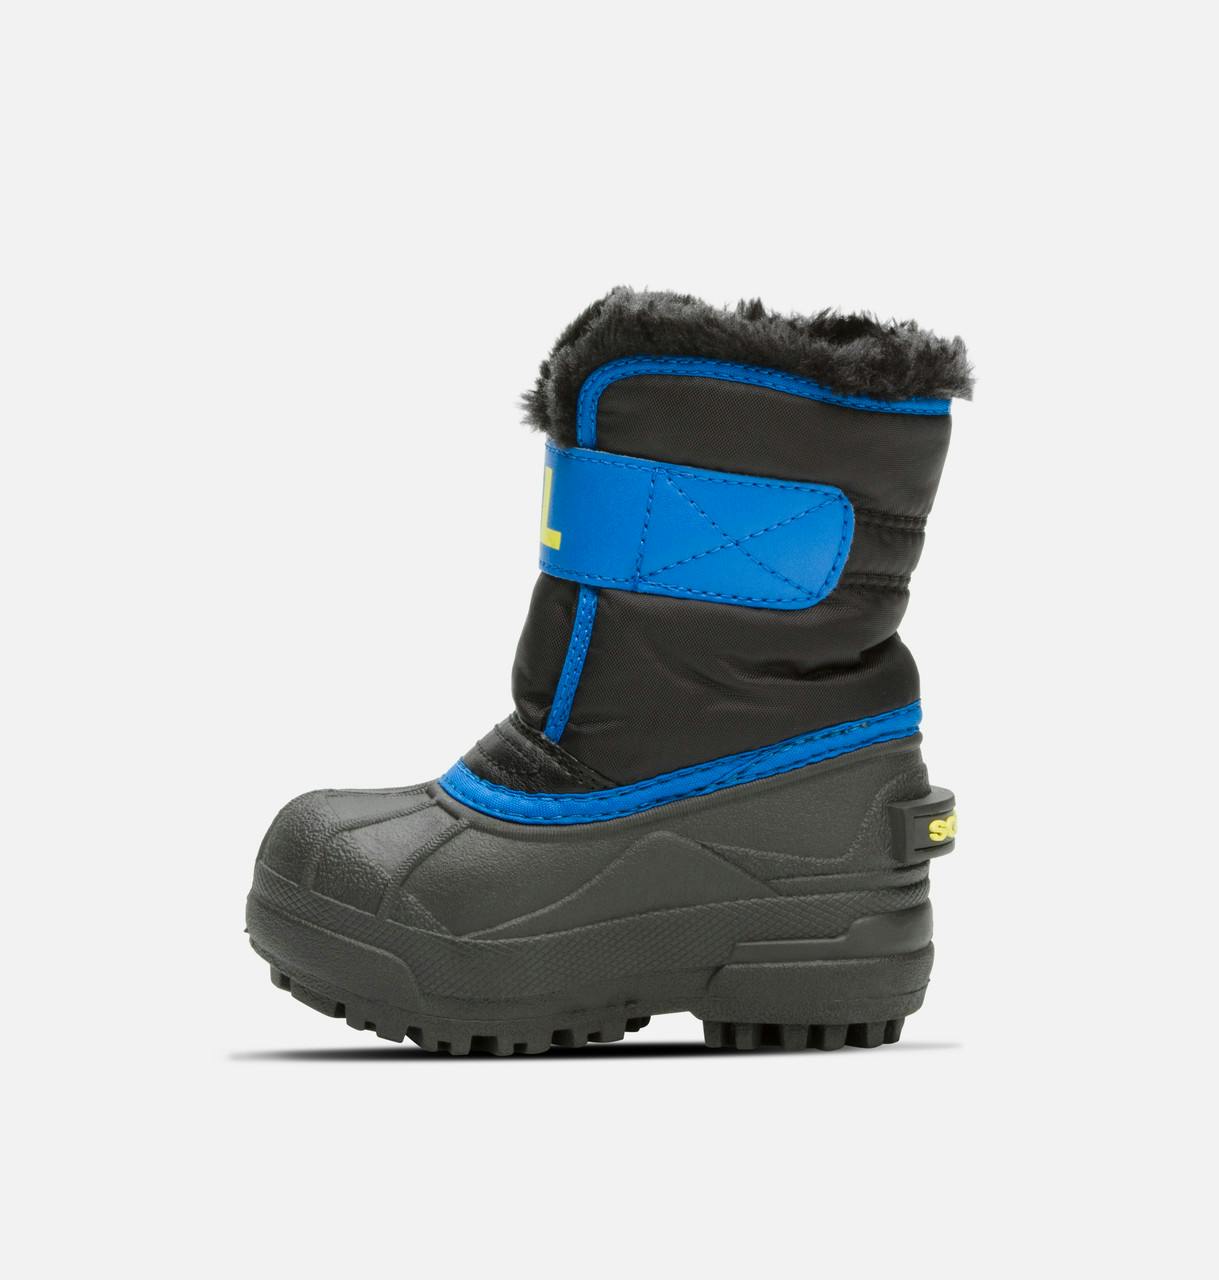 Snow Commander Winter Boots Black/Super Blue